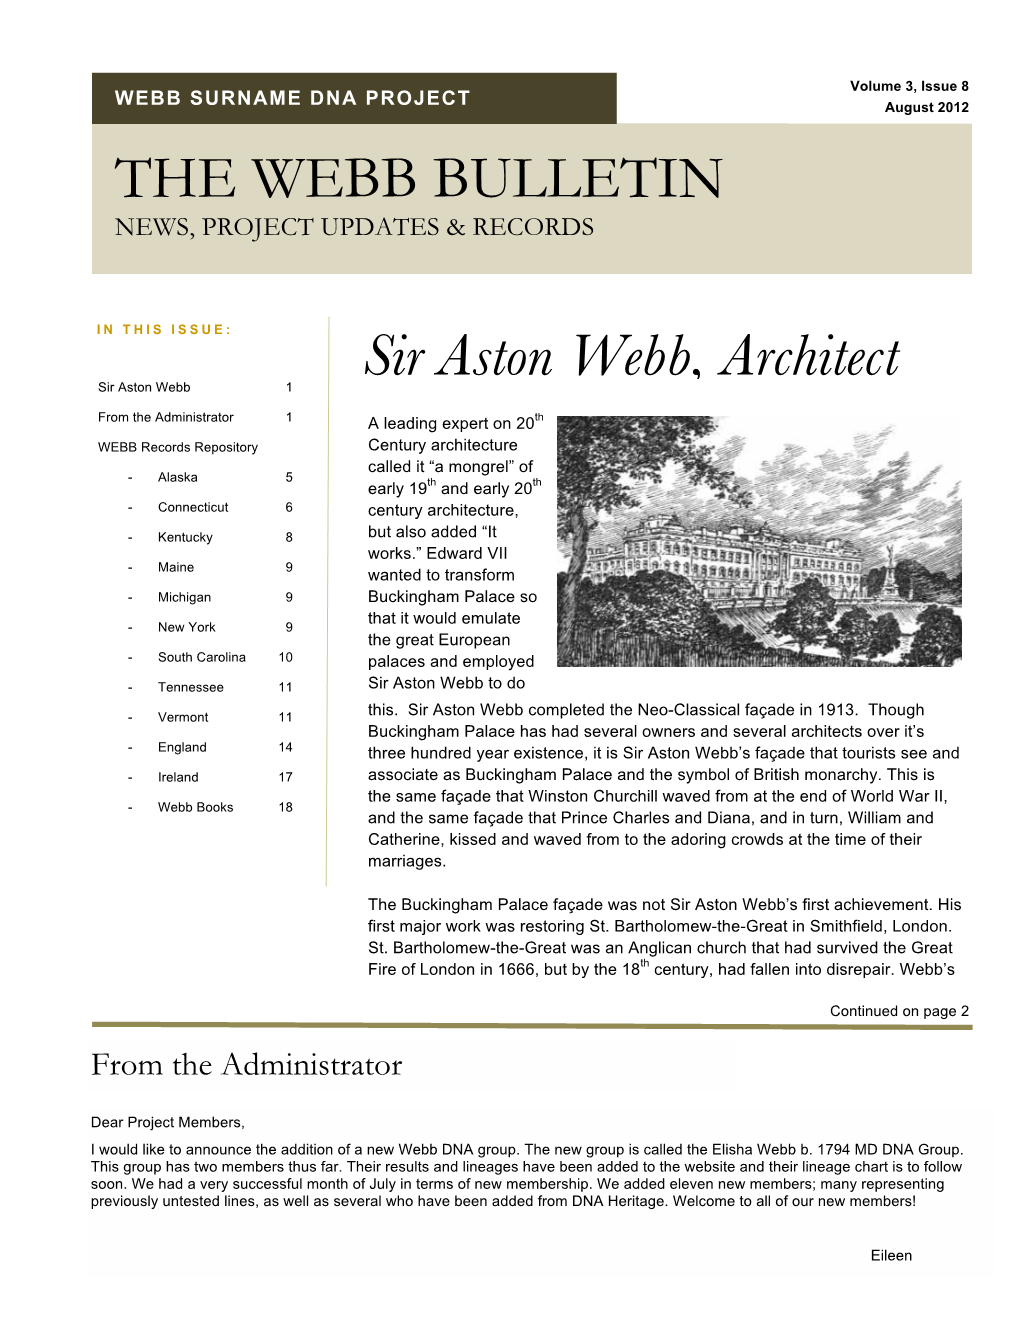 THE WEBB BULLETIN Sir Aston Webb, Architect